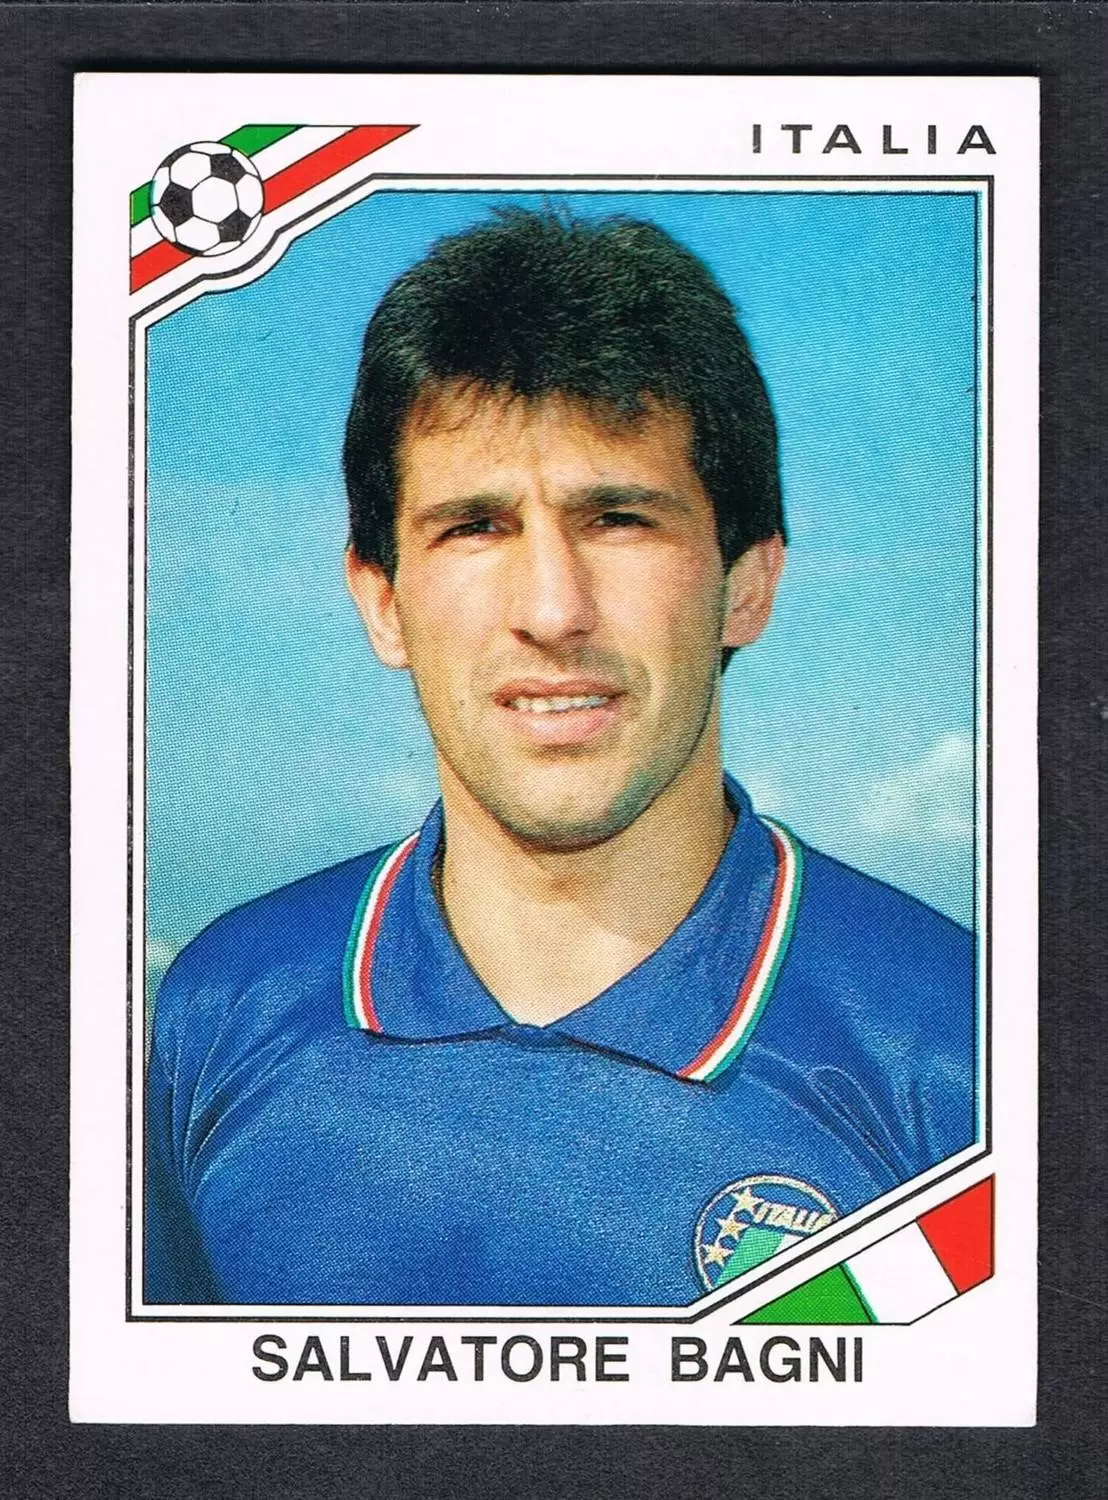 Mexico 86 World Cup - Salvatore Bagni - Italie